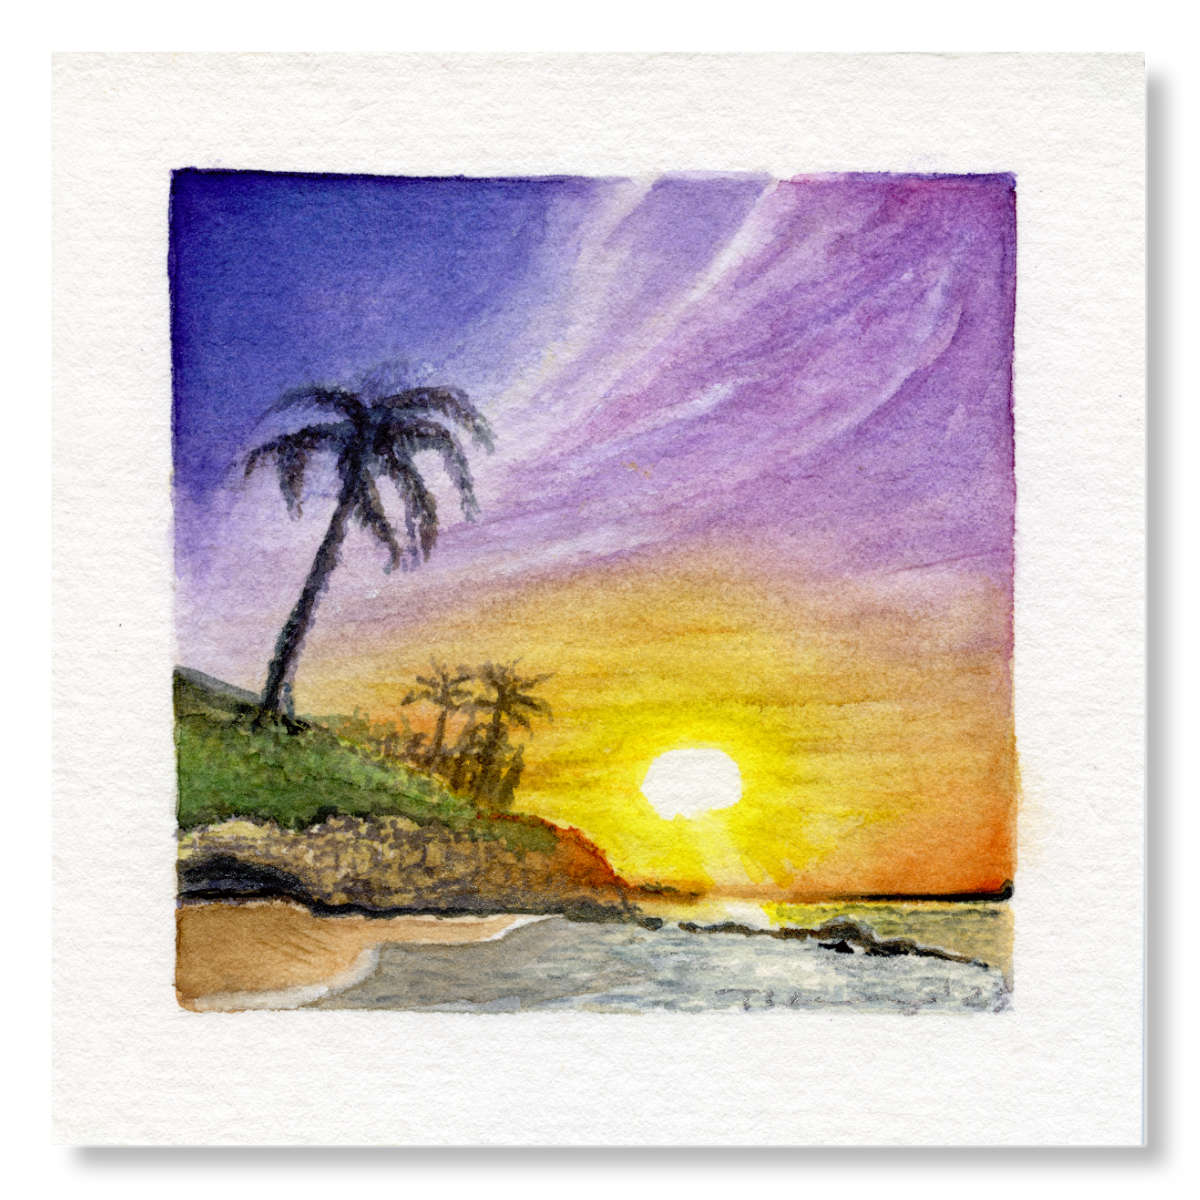 Tropical Sunrise. 8x8" Print by Tanya Kucey. https://shop.tanyakucey.com